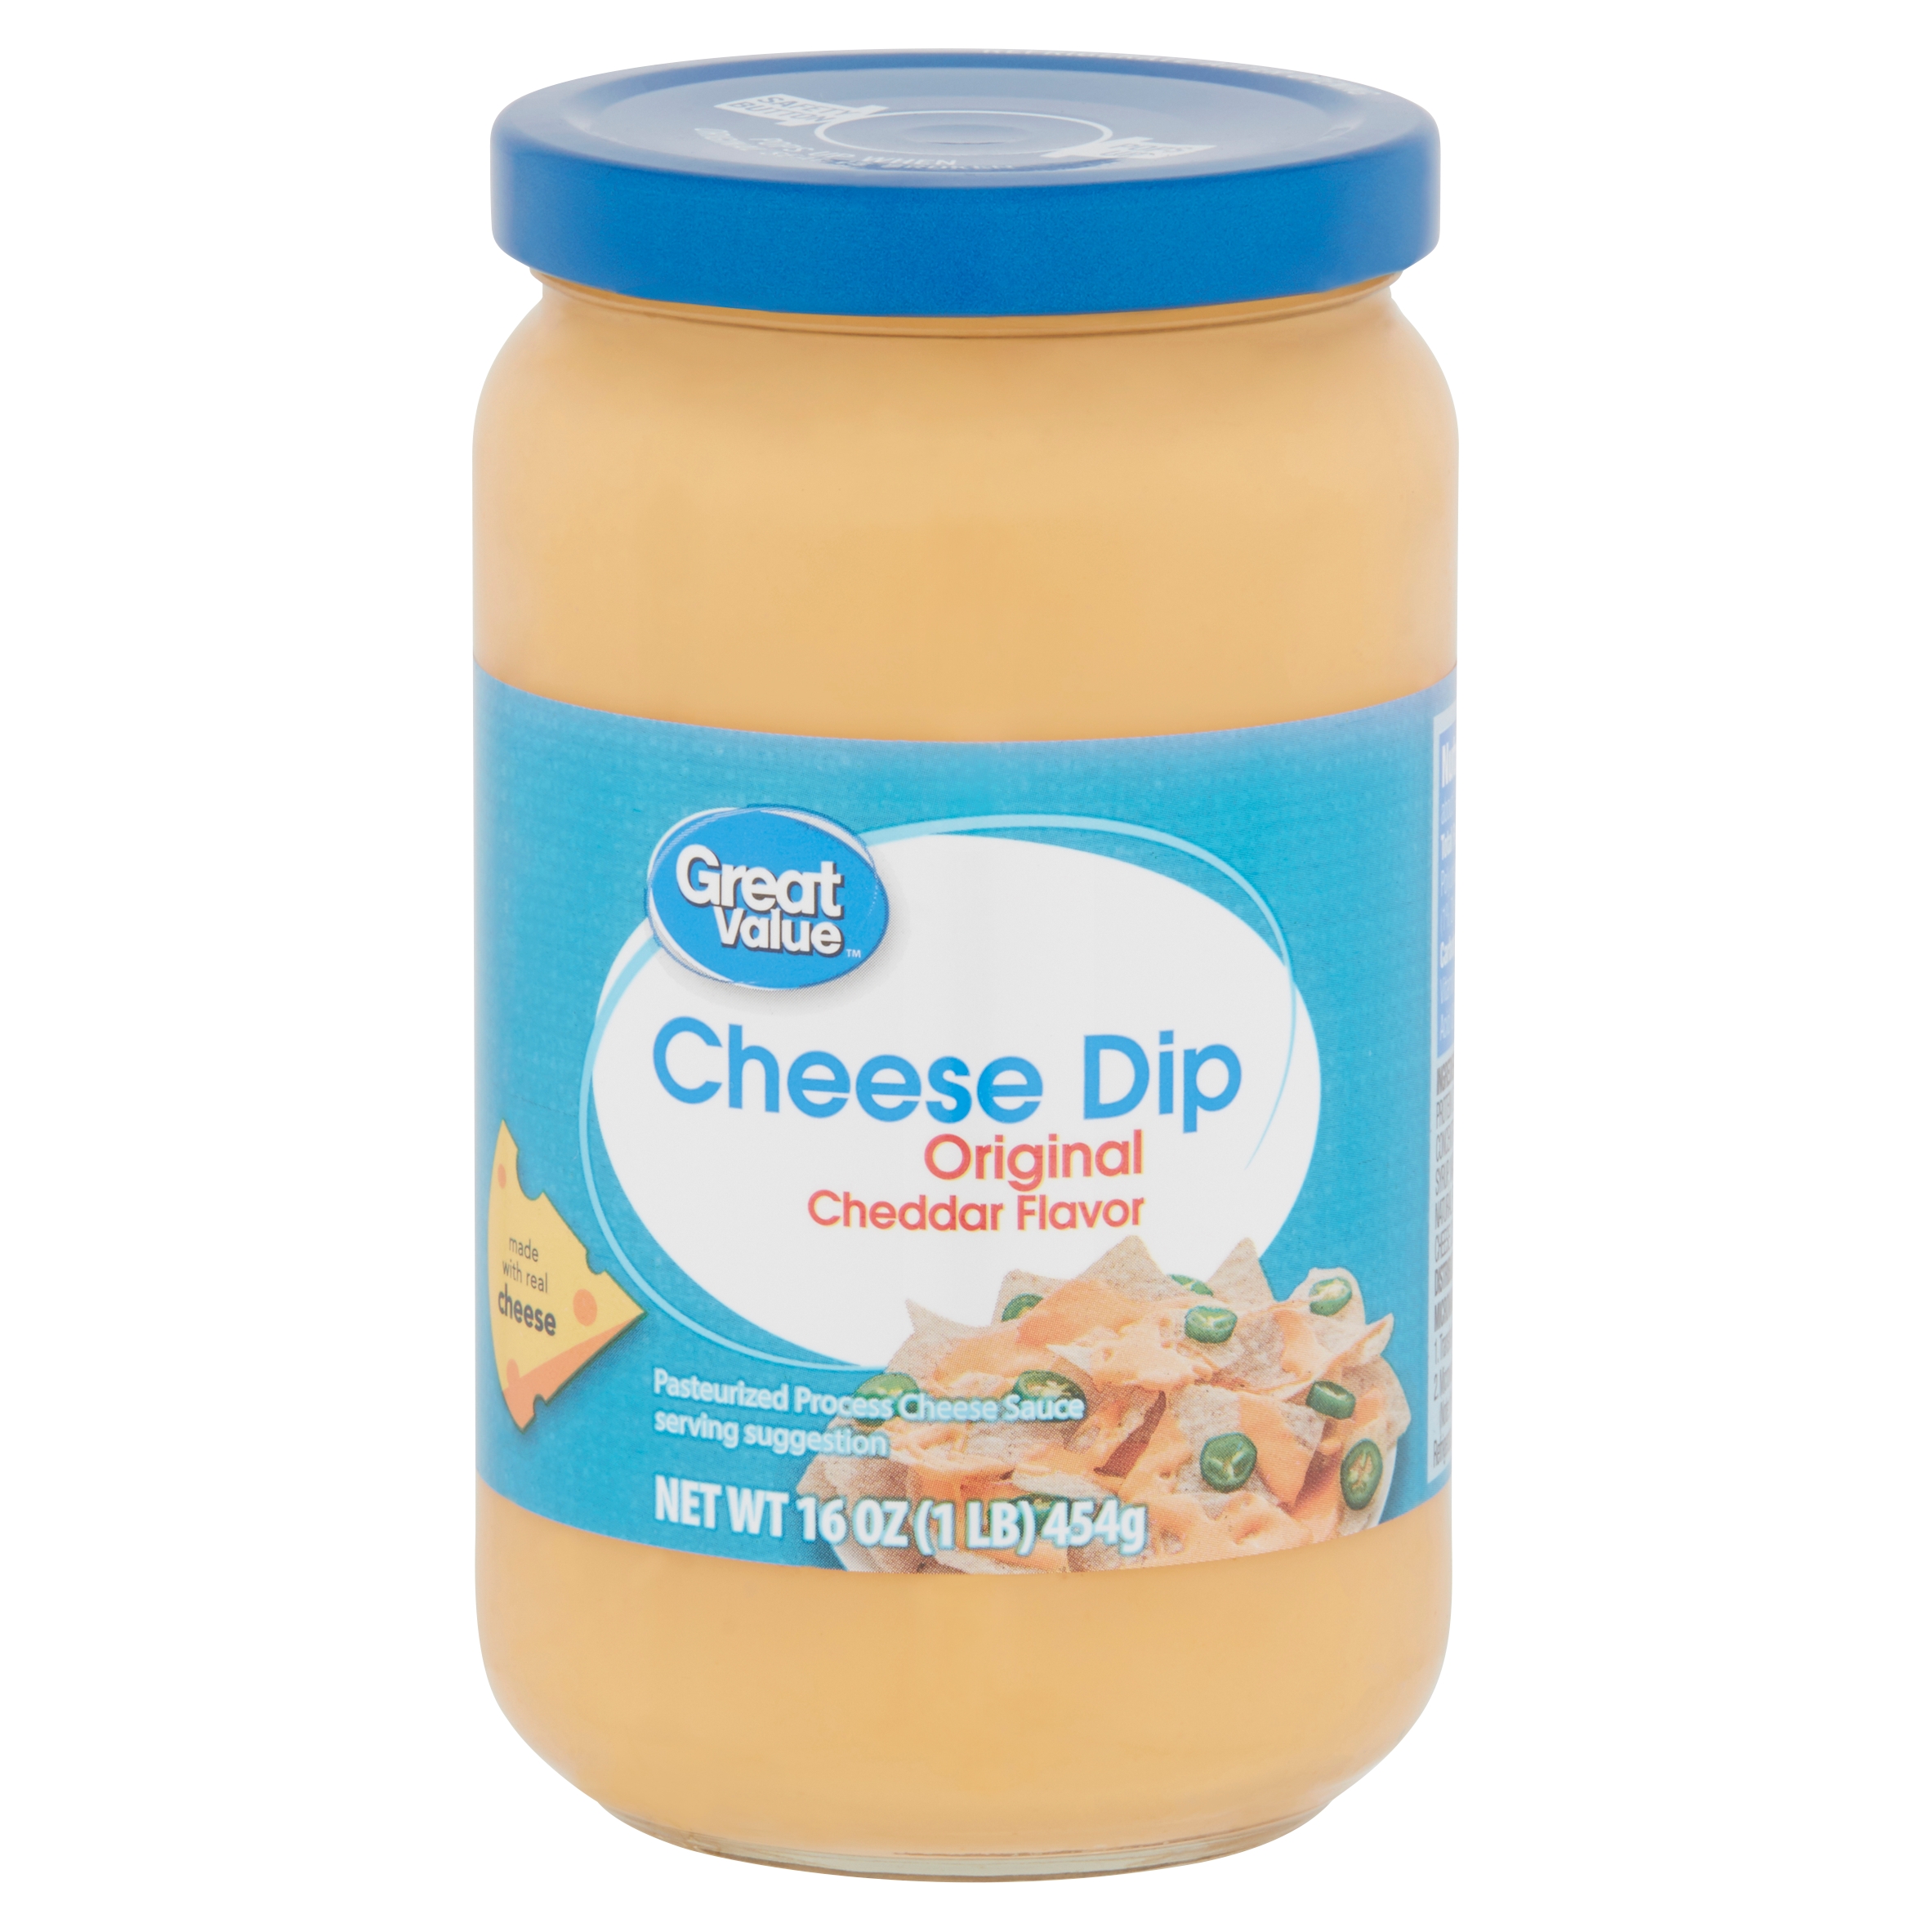 Great Value Original Cheddar Flavor Cheese Dip, 16 Oz Image